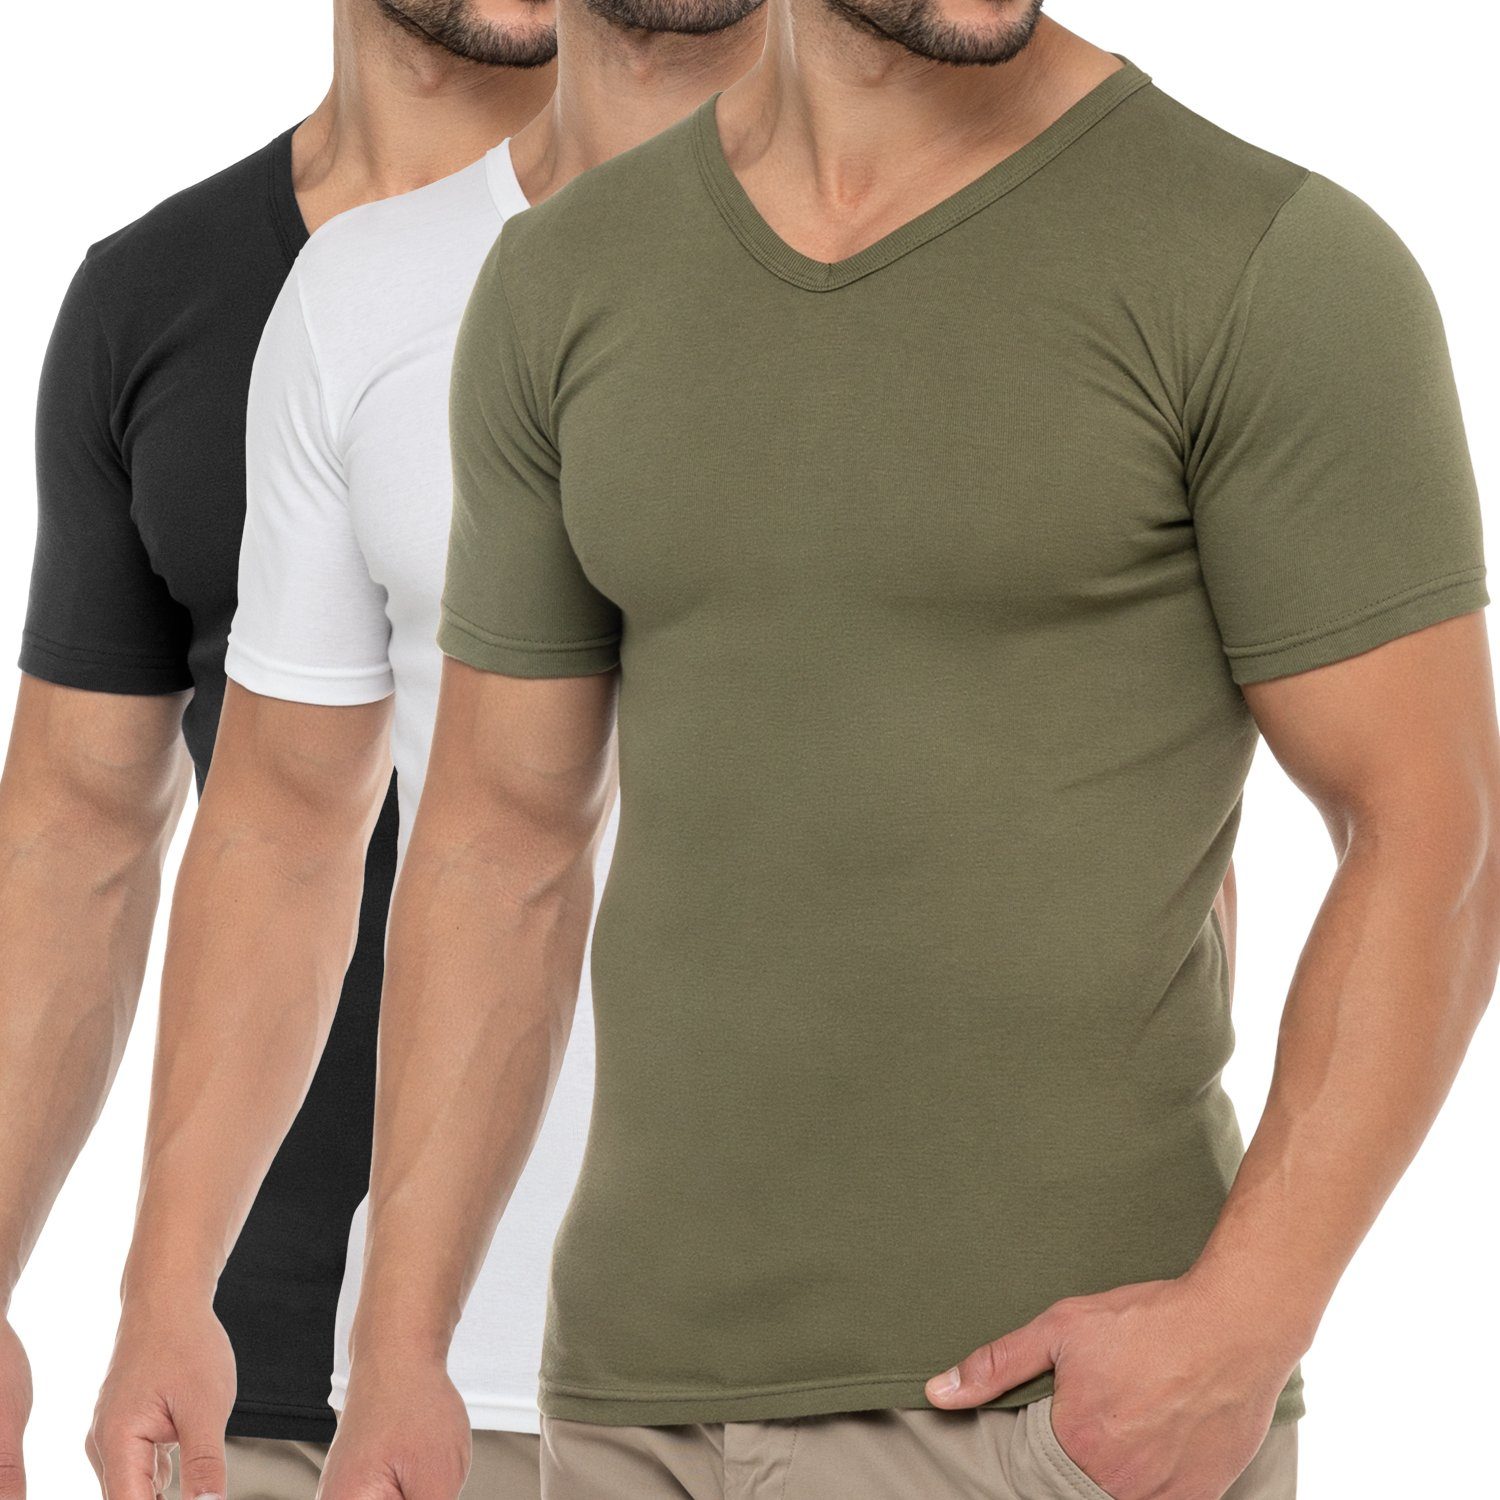 celodoro Kurzarmshirt Herren Business T-Shirt V-Neck Feinripp Baumwolle (1er/3er) Olive / Weiss / Schwarz